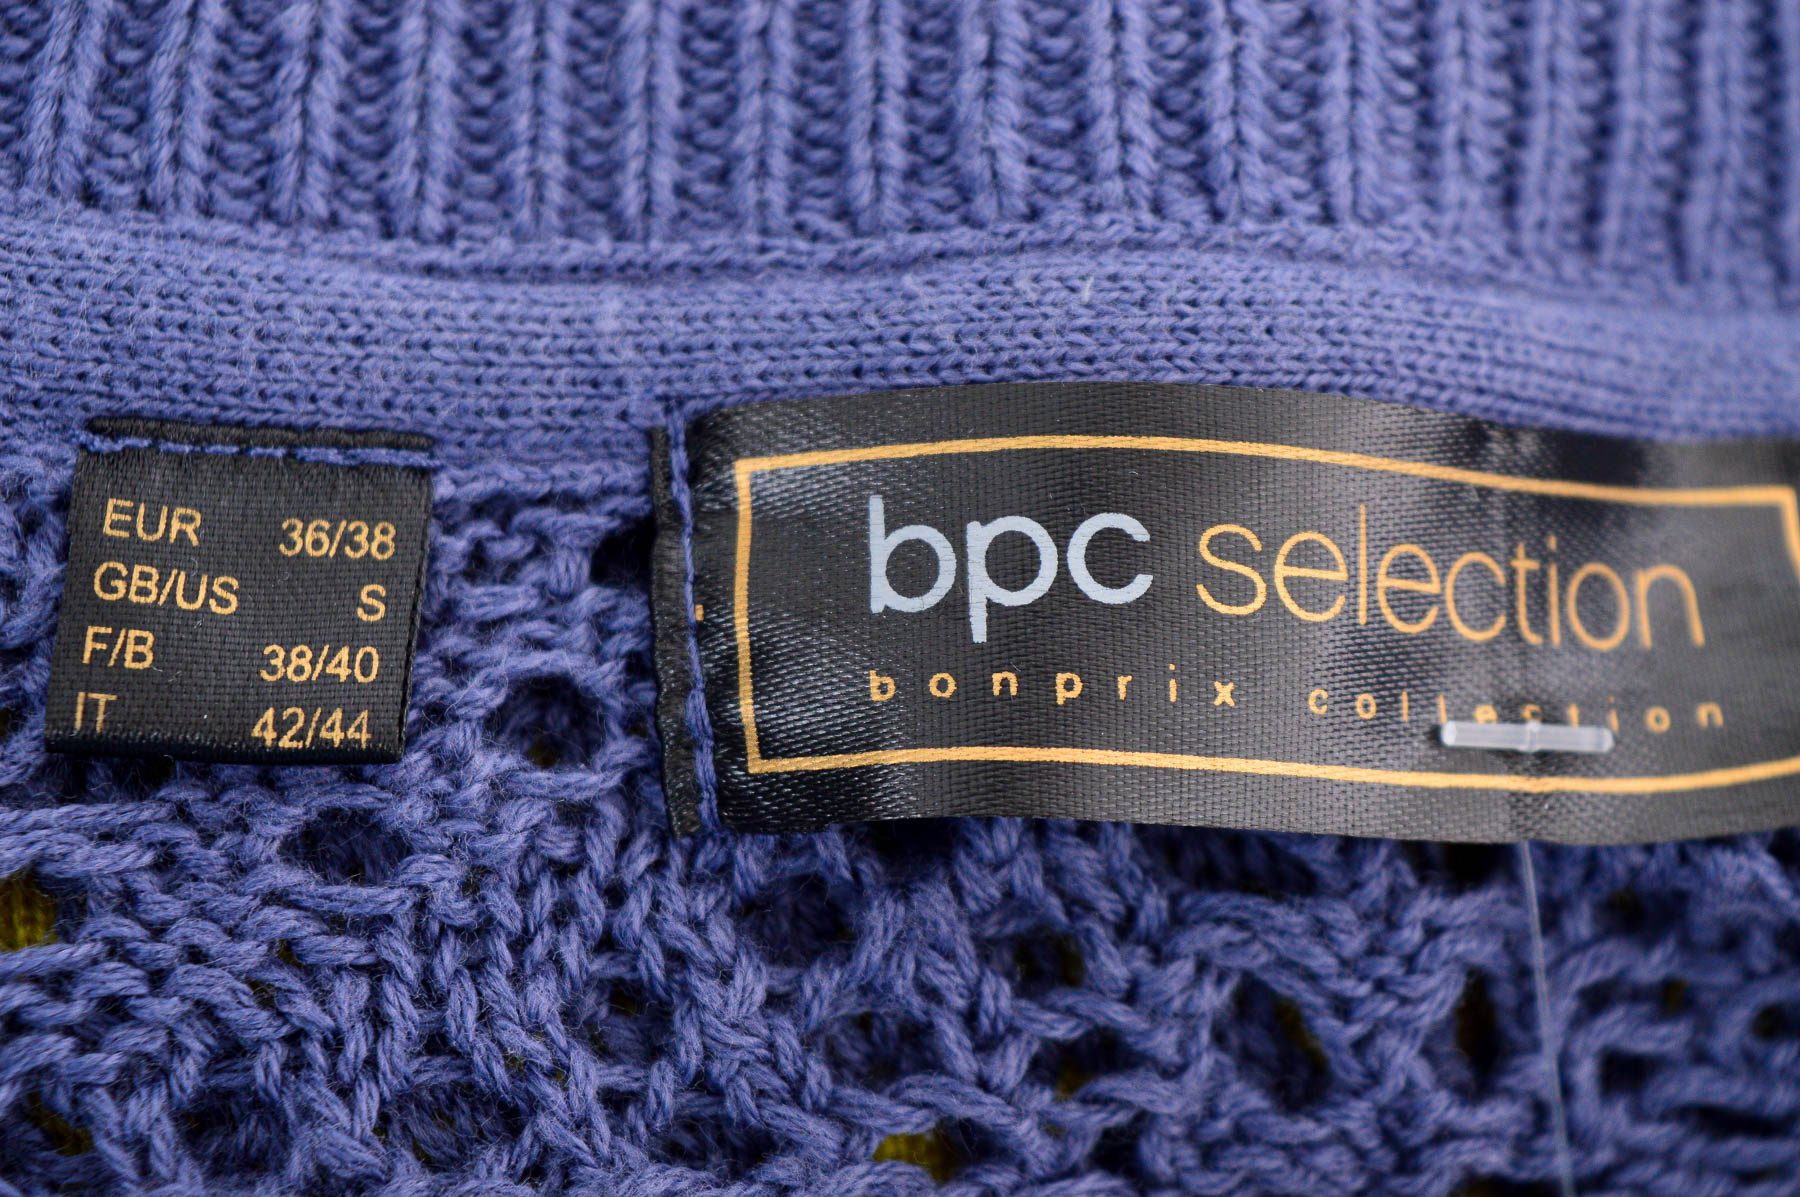 Women's cardigan - Bpc Selection Bonprix Collection - 2